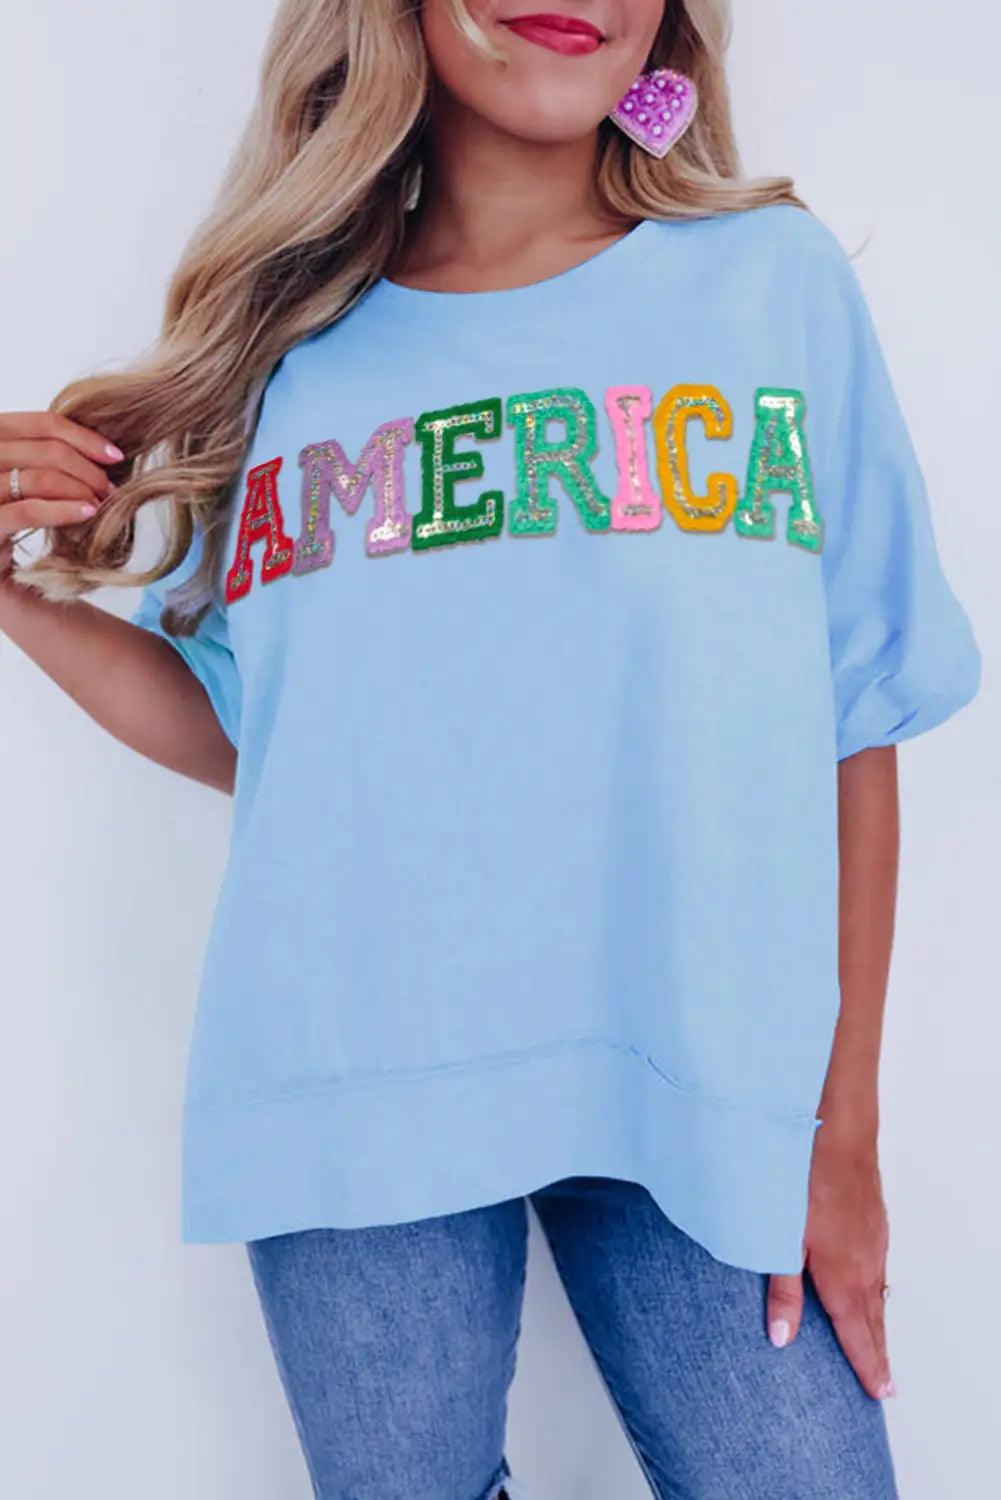 Sparkle america pastel embroidered graphic t-shirt - mist blue / s / 95% cotton + 5% elastane - t-shirts